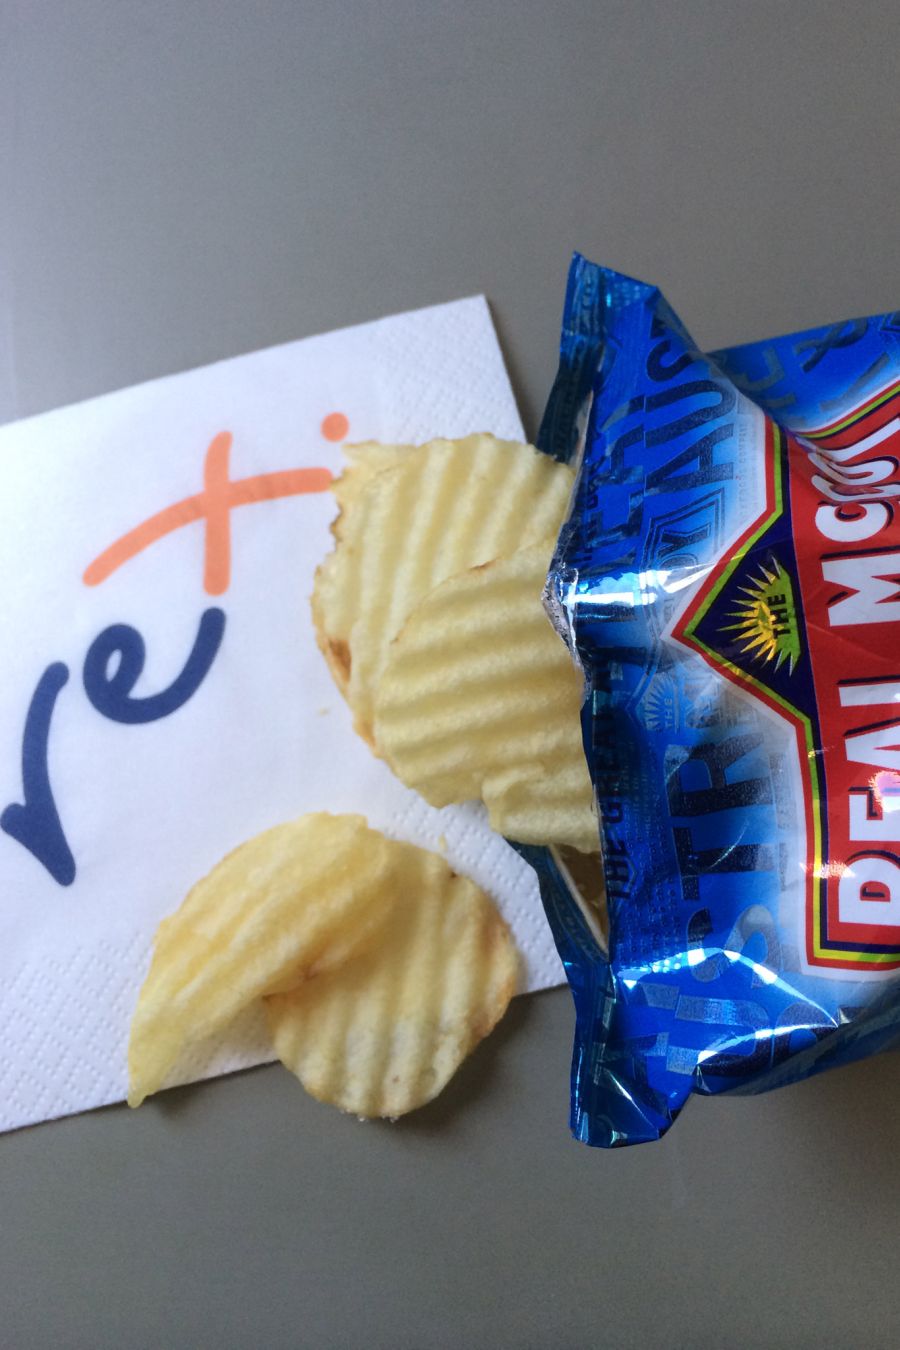 Savoury snack on King Island to Melbourne flight - potato crisps